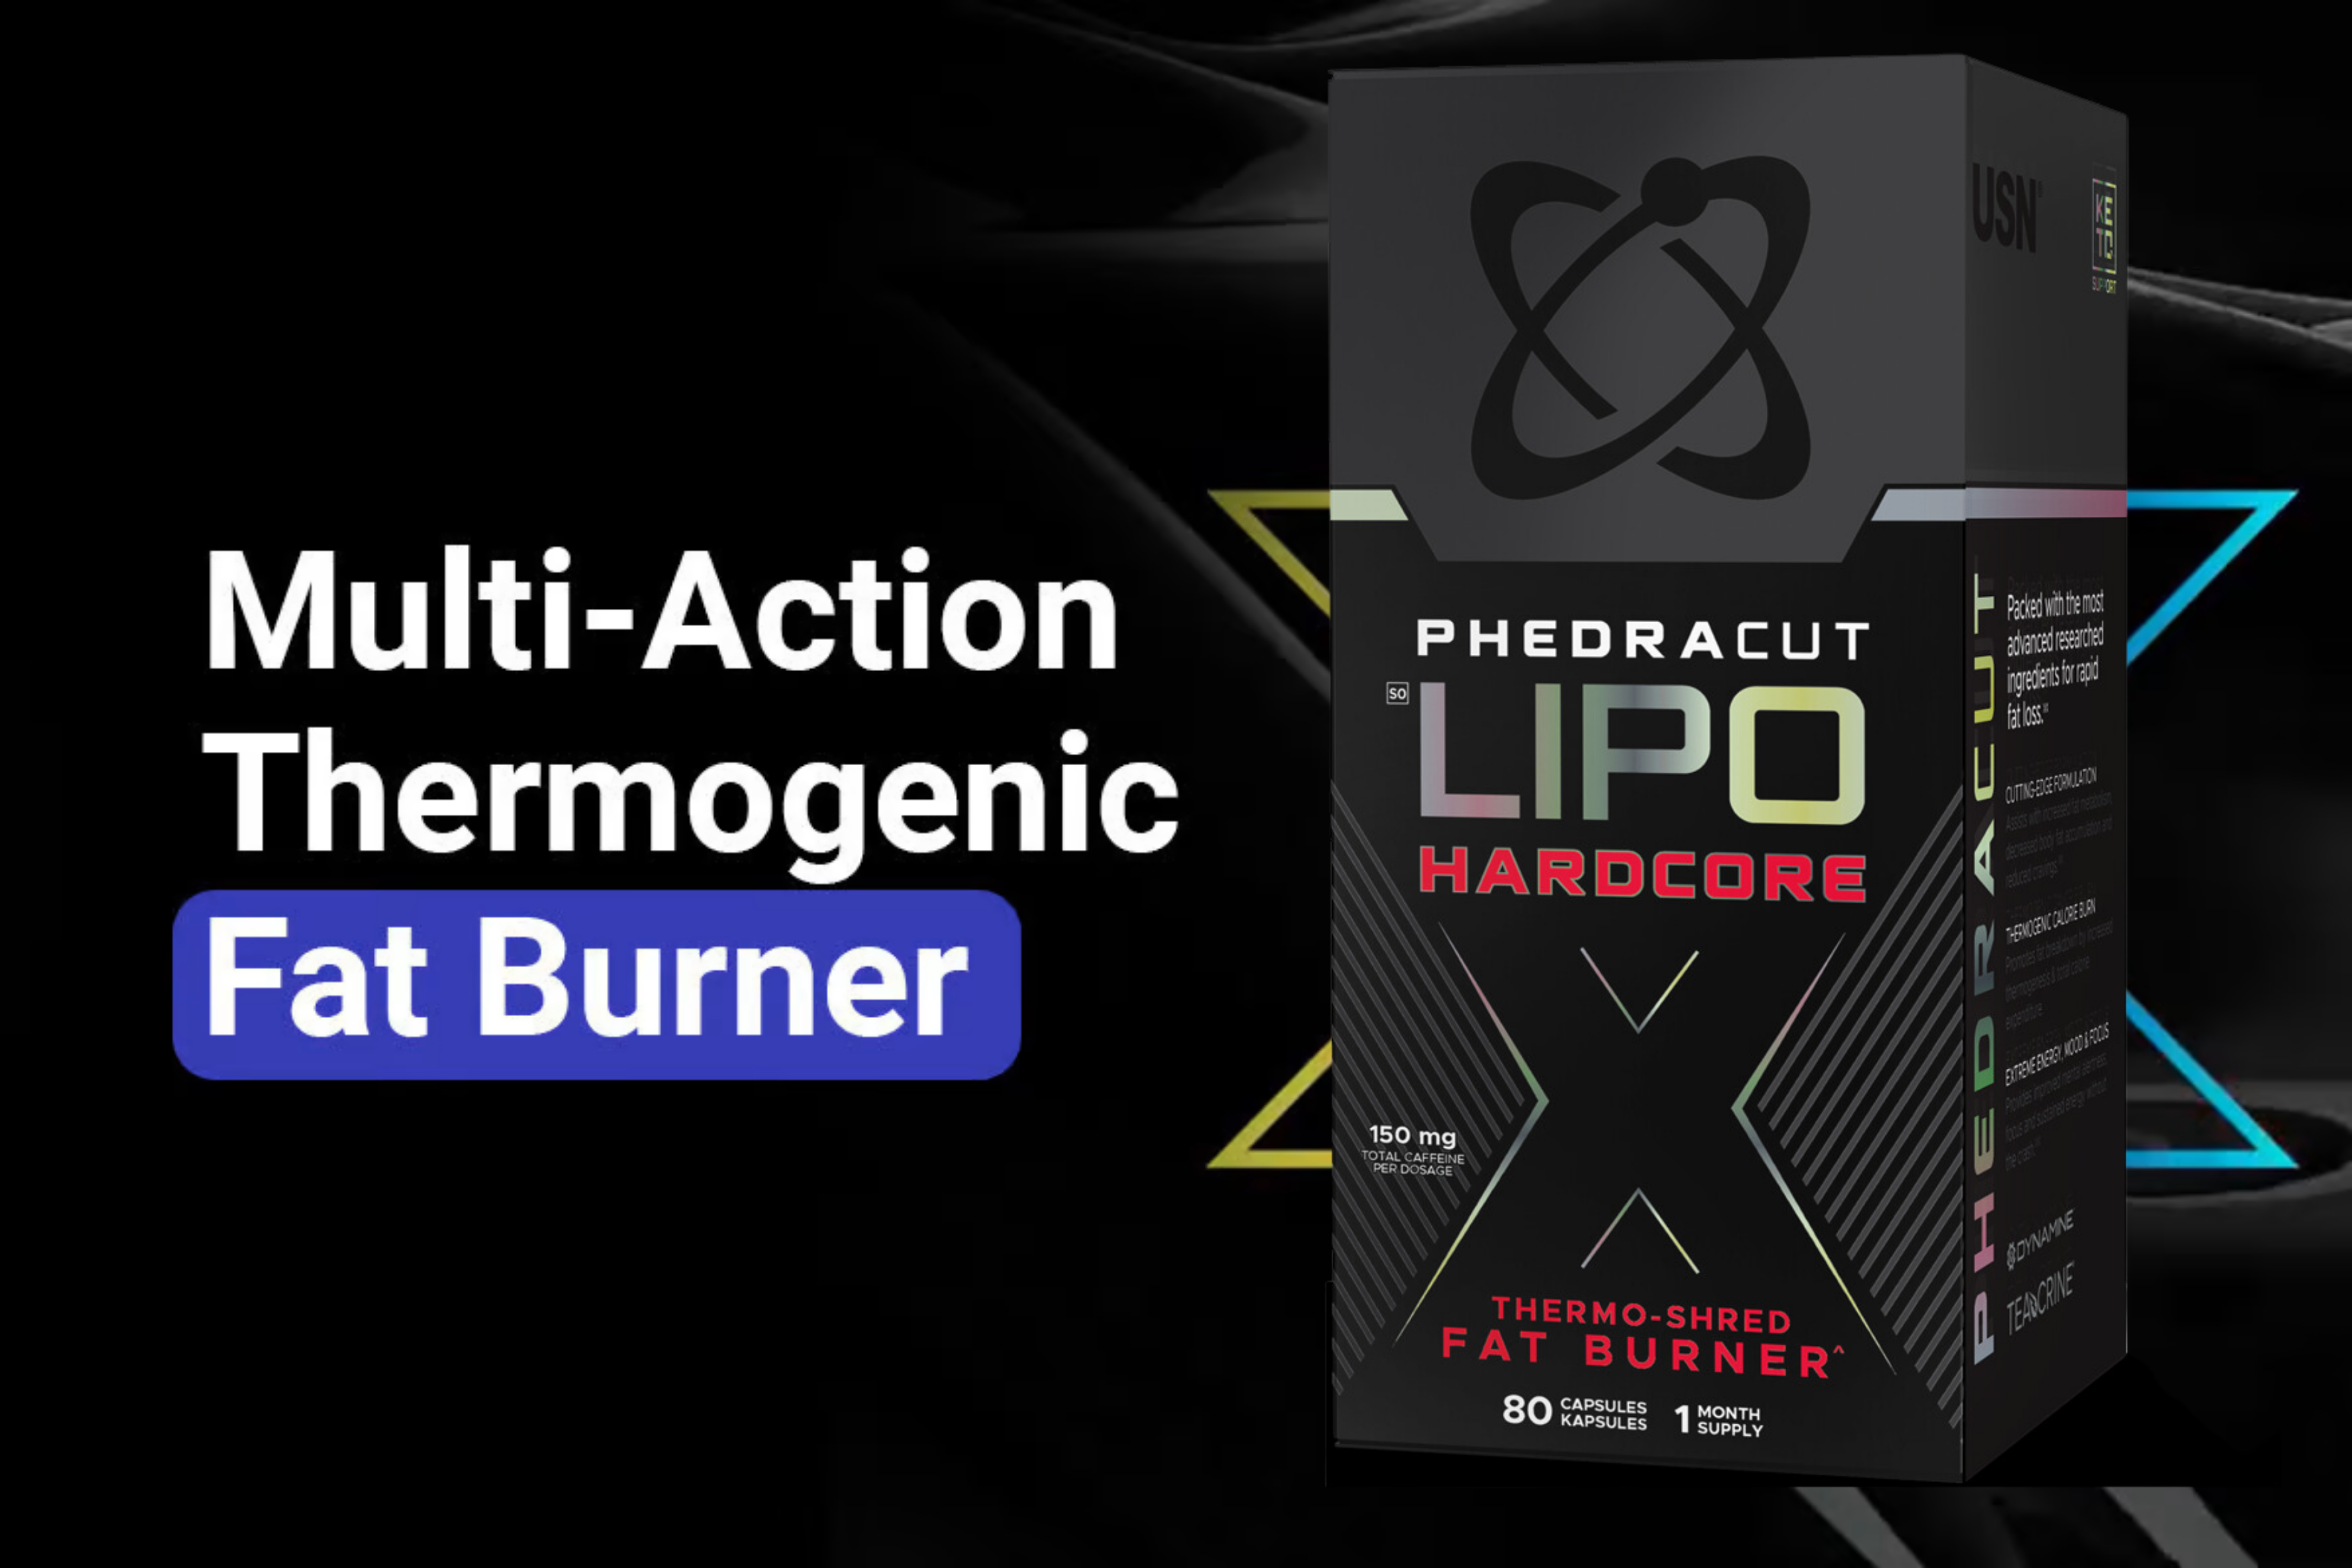 USN Phedra Cut Extreme Fat Burner Lipo X Hardcore (80 Caps) With Thermogenic Weight Loss And Shredding Aid | Dubai, UAE